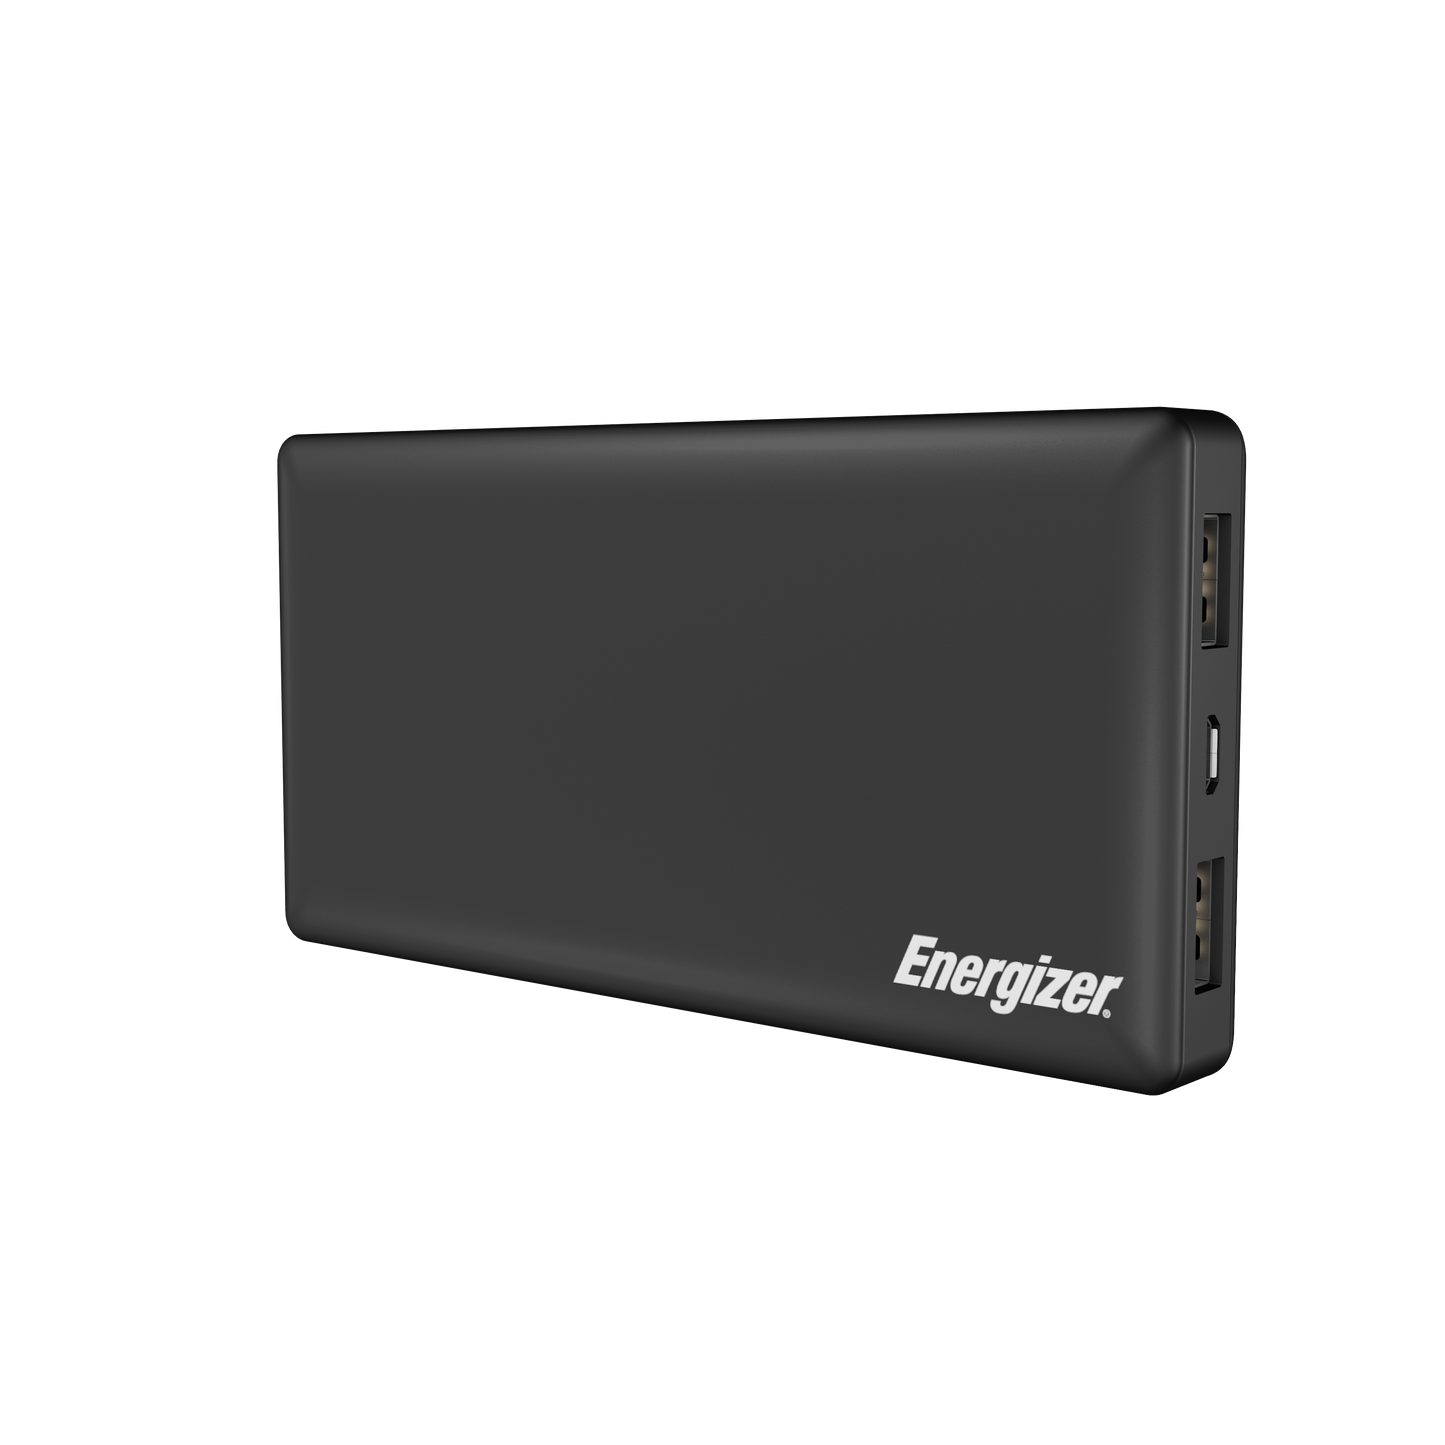 Energizer 10,000mAh Slim Design with Dual Output Power Bank UE10033